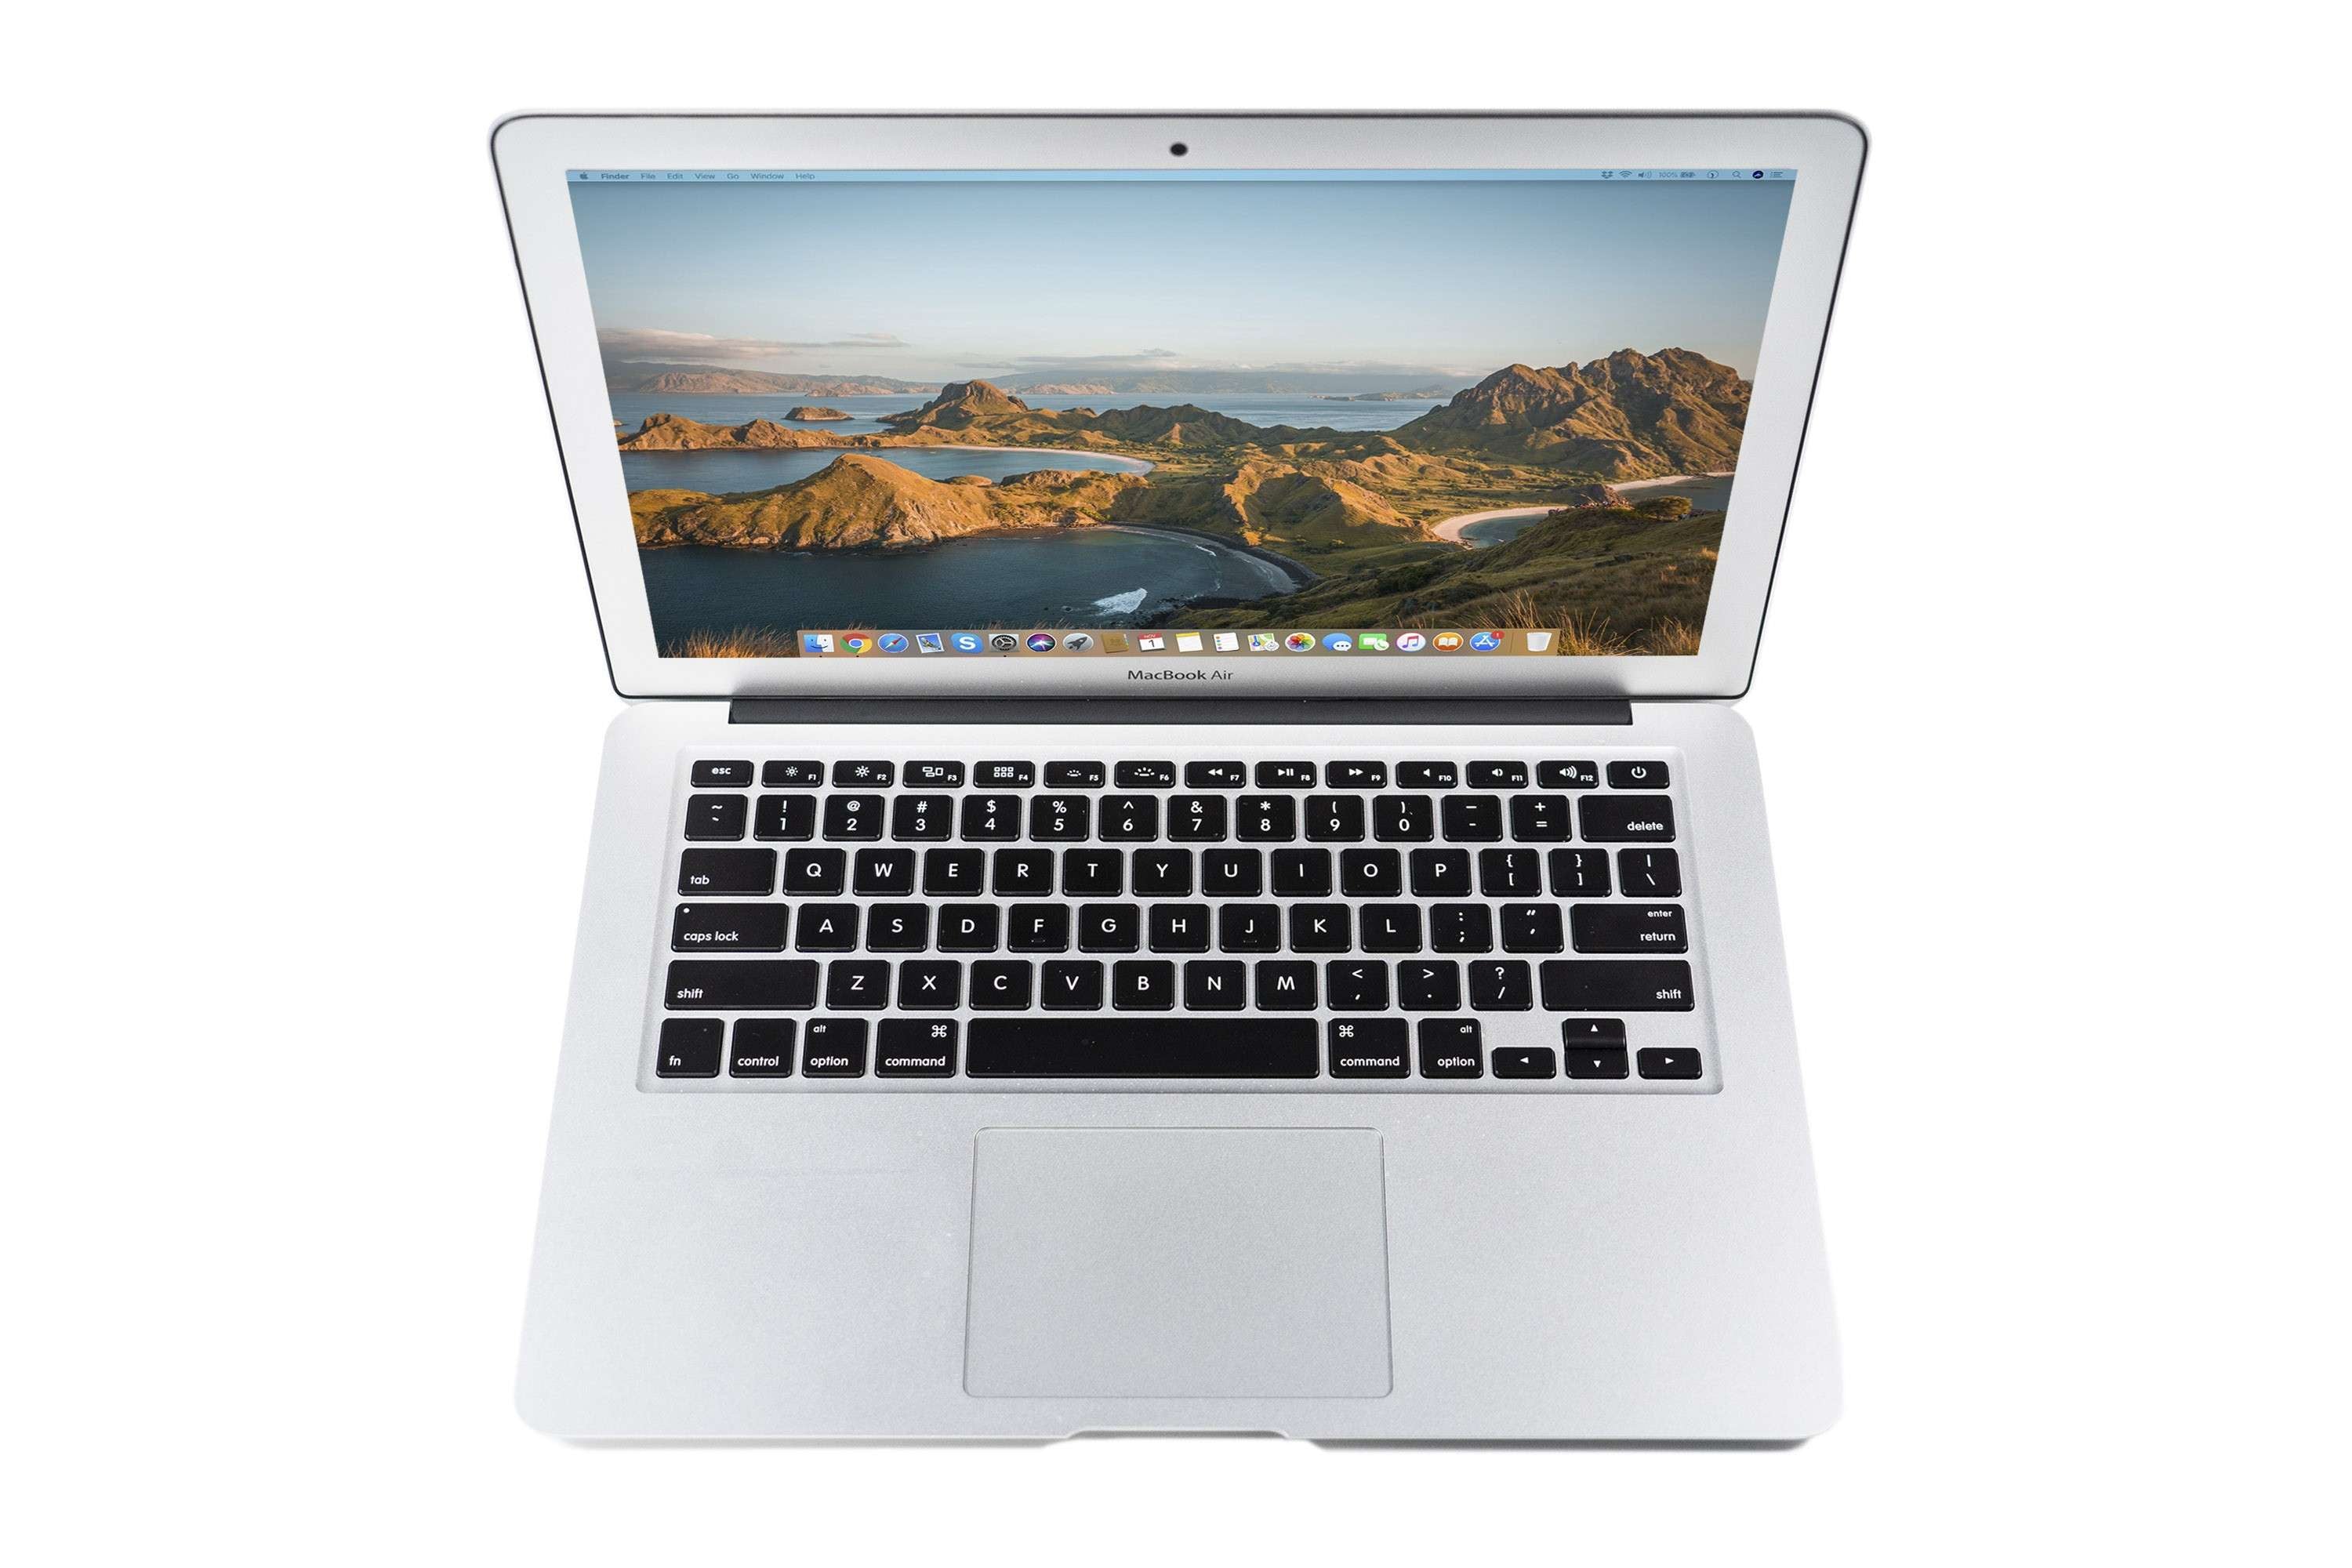 Buy Used & Refurbished Apple MacBook Air 11-inch (2014) 1.7GHz i7